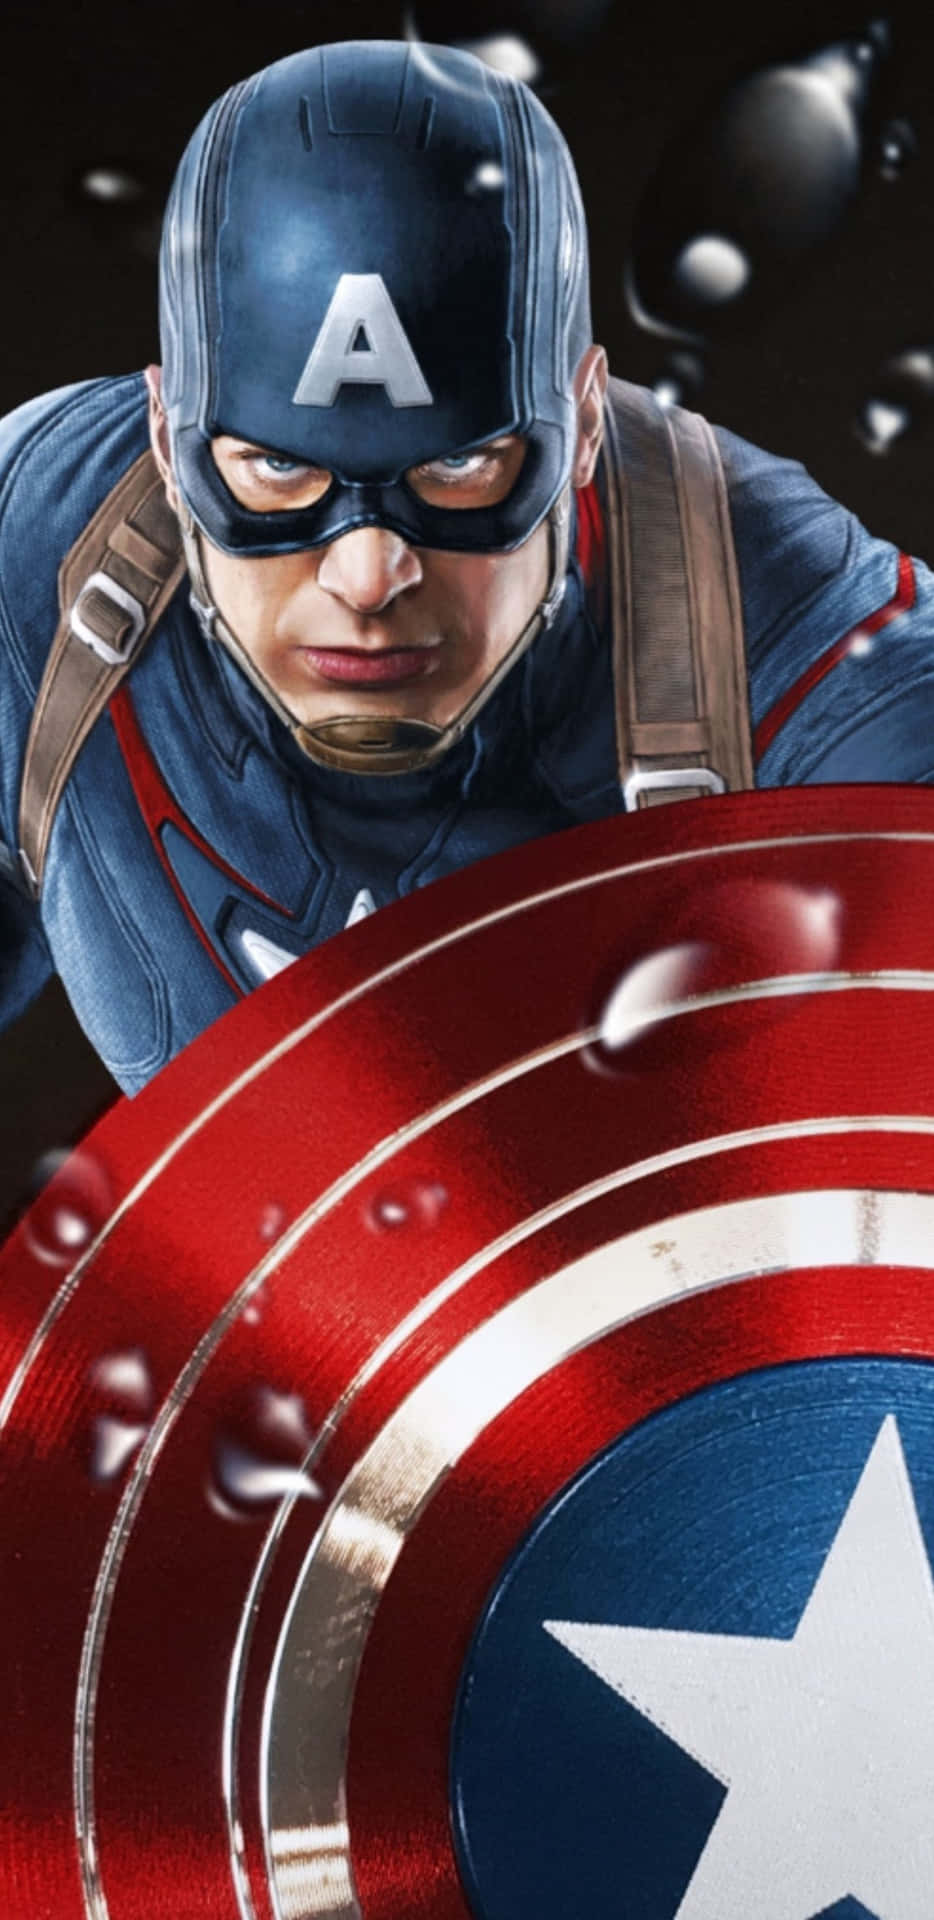 Pixel3xl Bakgrundsbild Med Kapten Amerika Från Avengers Age Of Ultron.